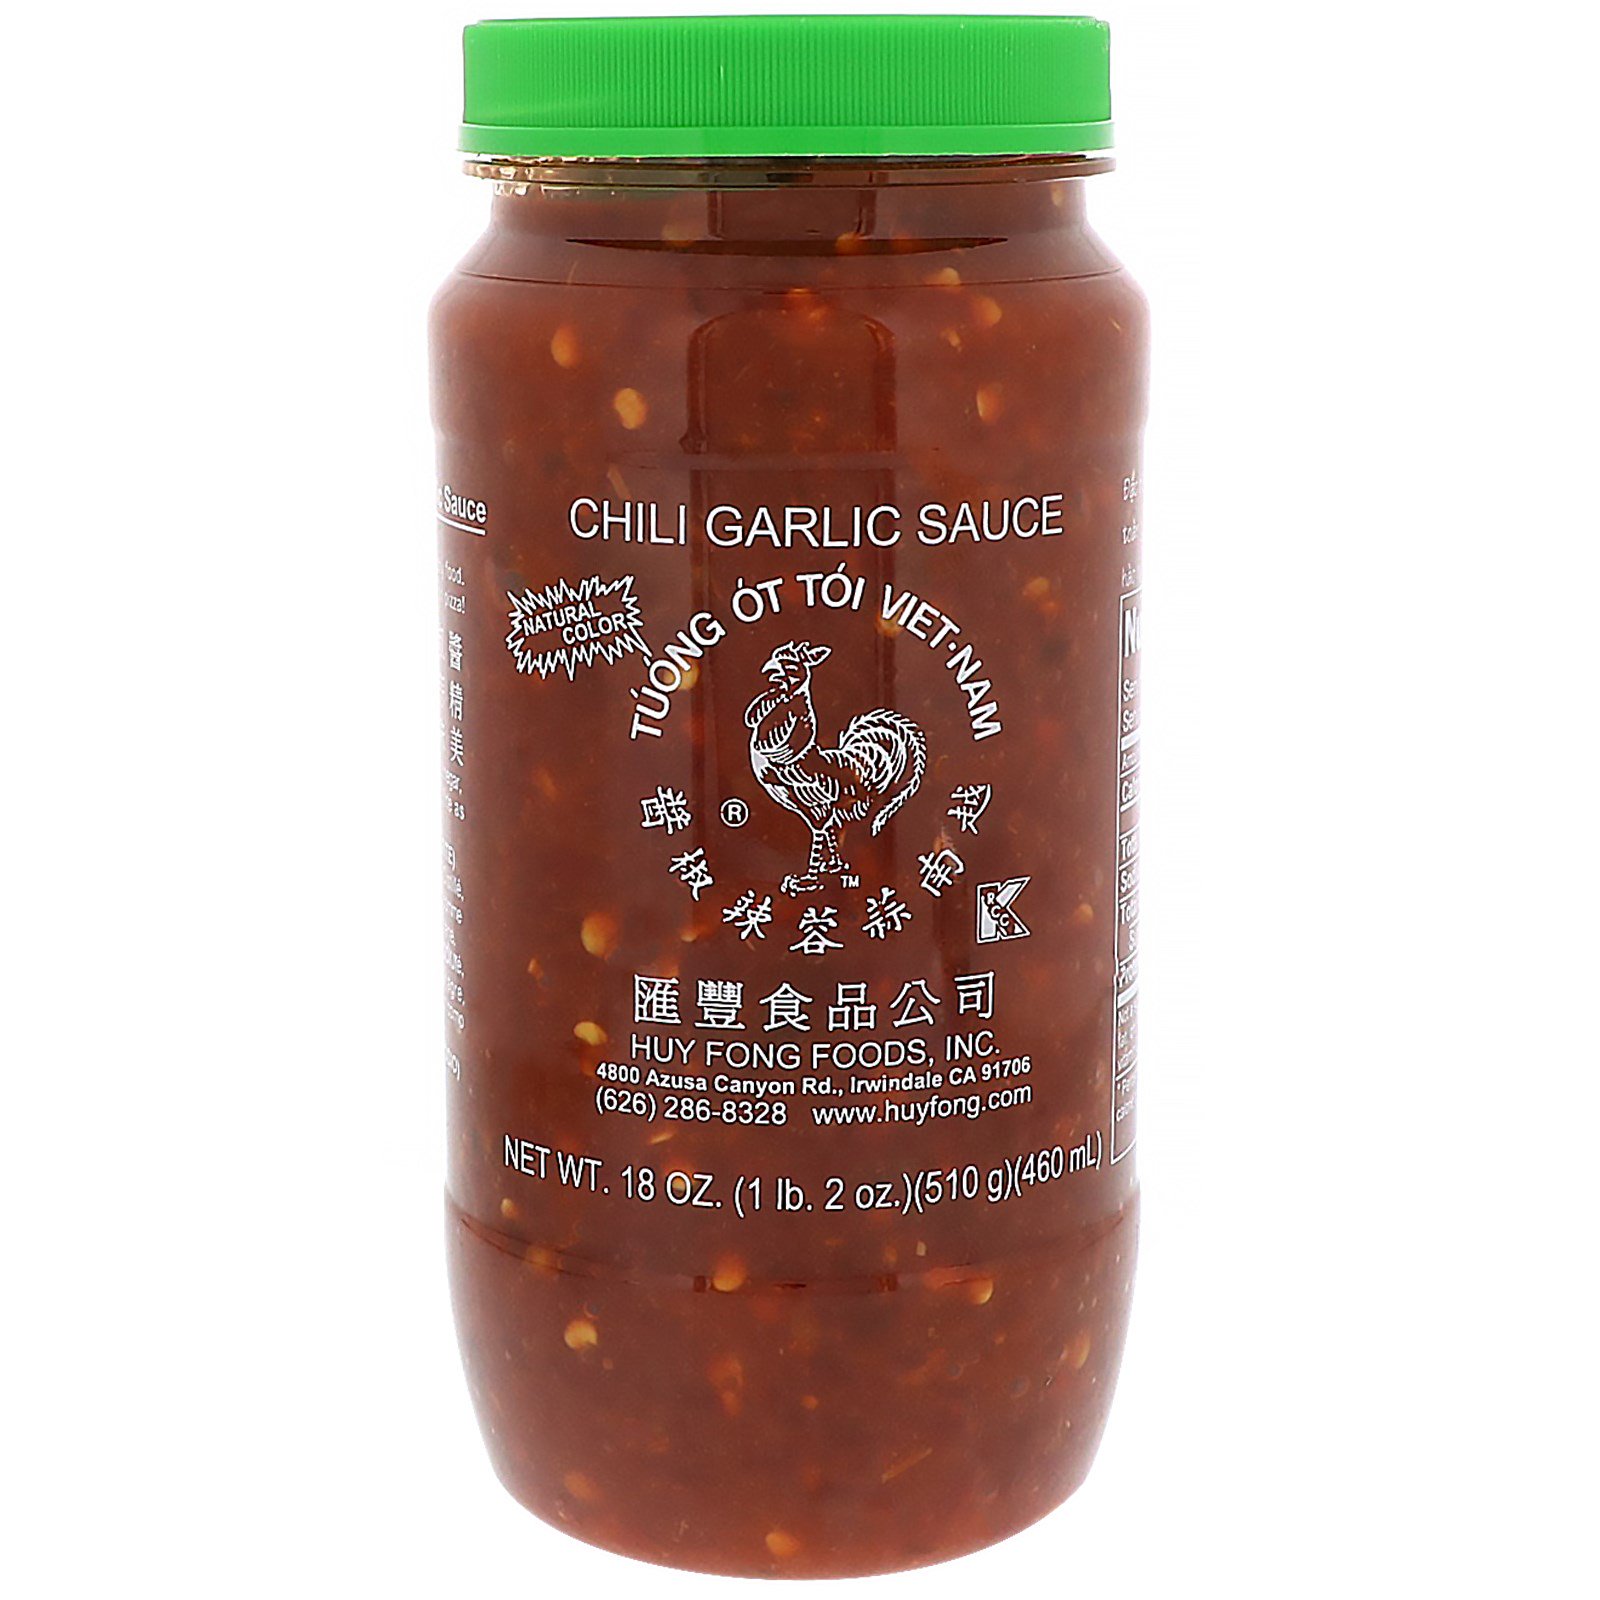 Huy Fong Foods Inc Chili Garlic Sauce 18 oz 510 g | eBay